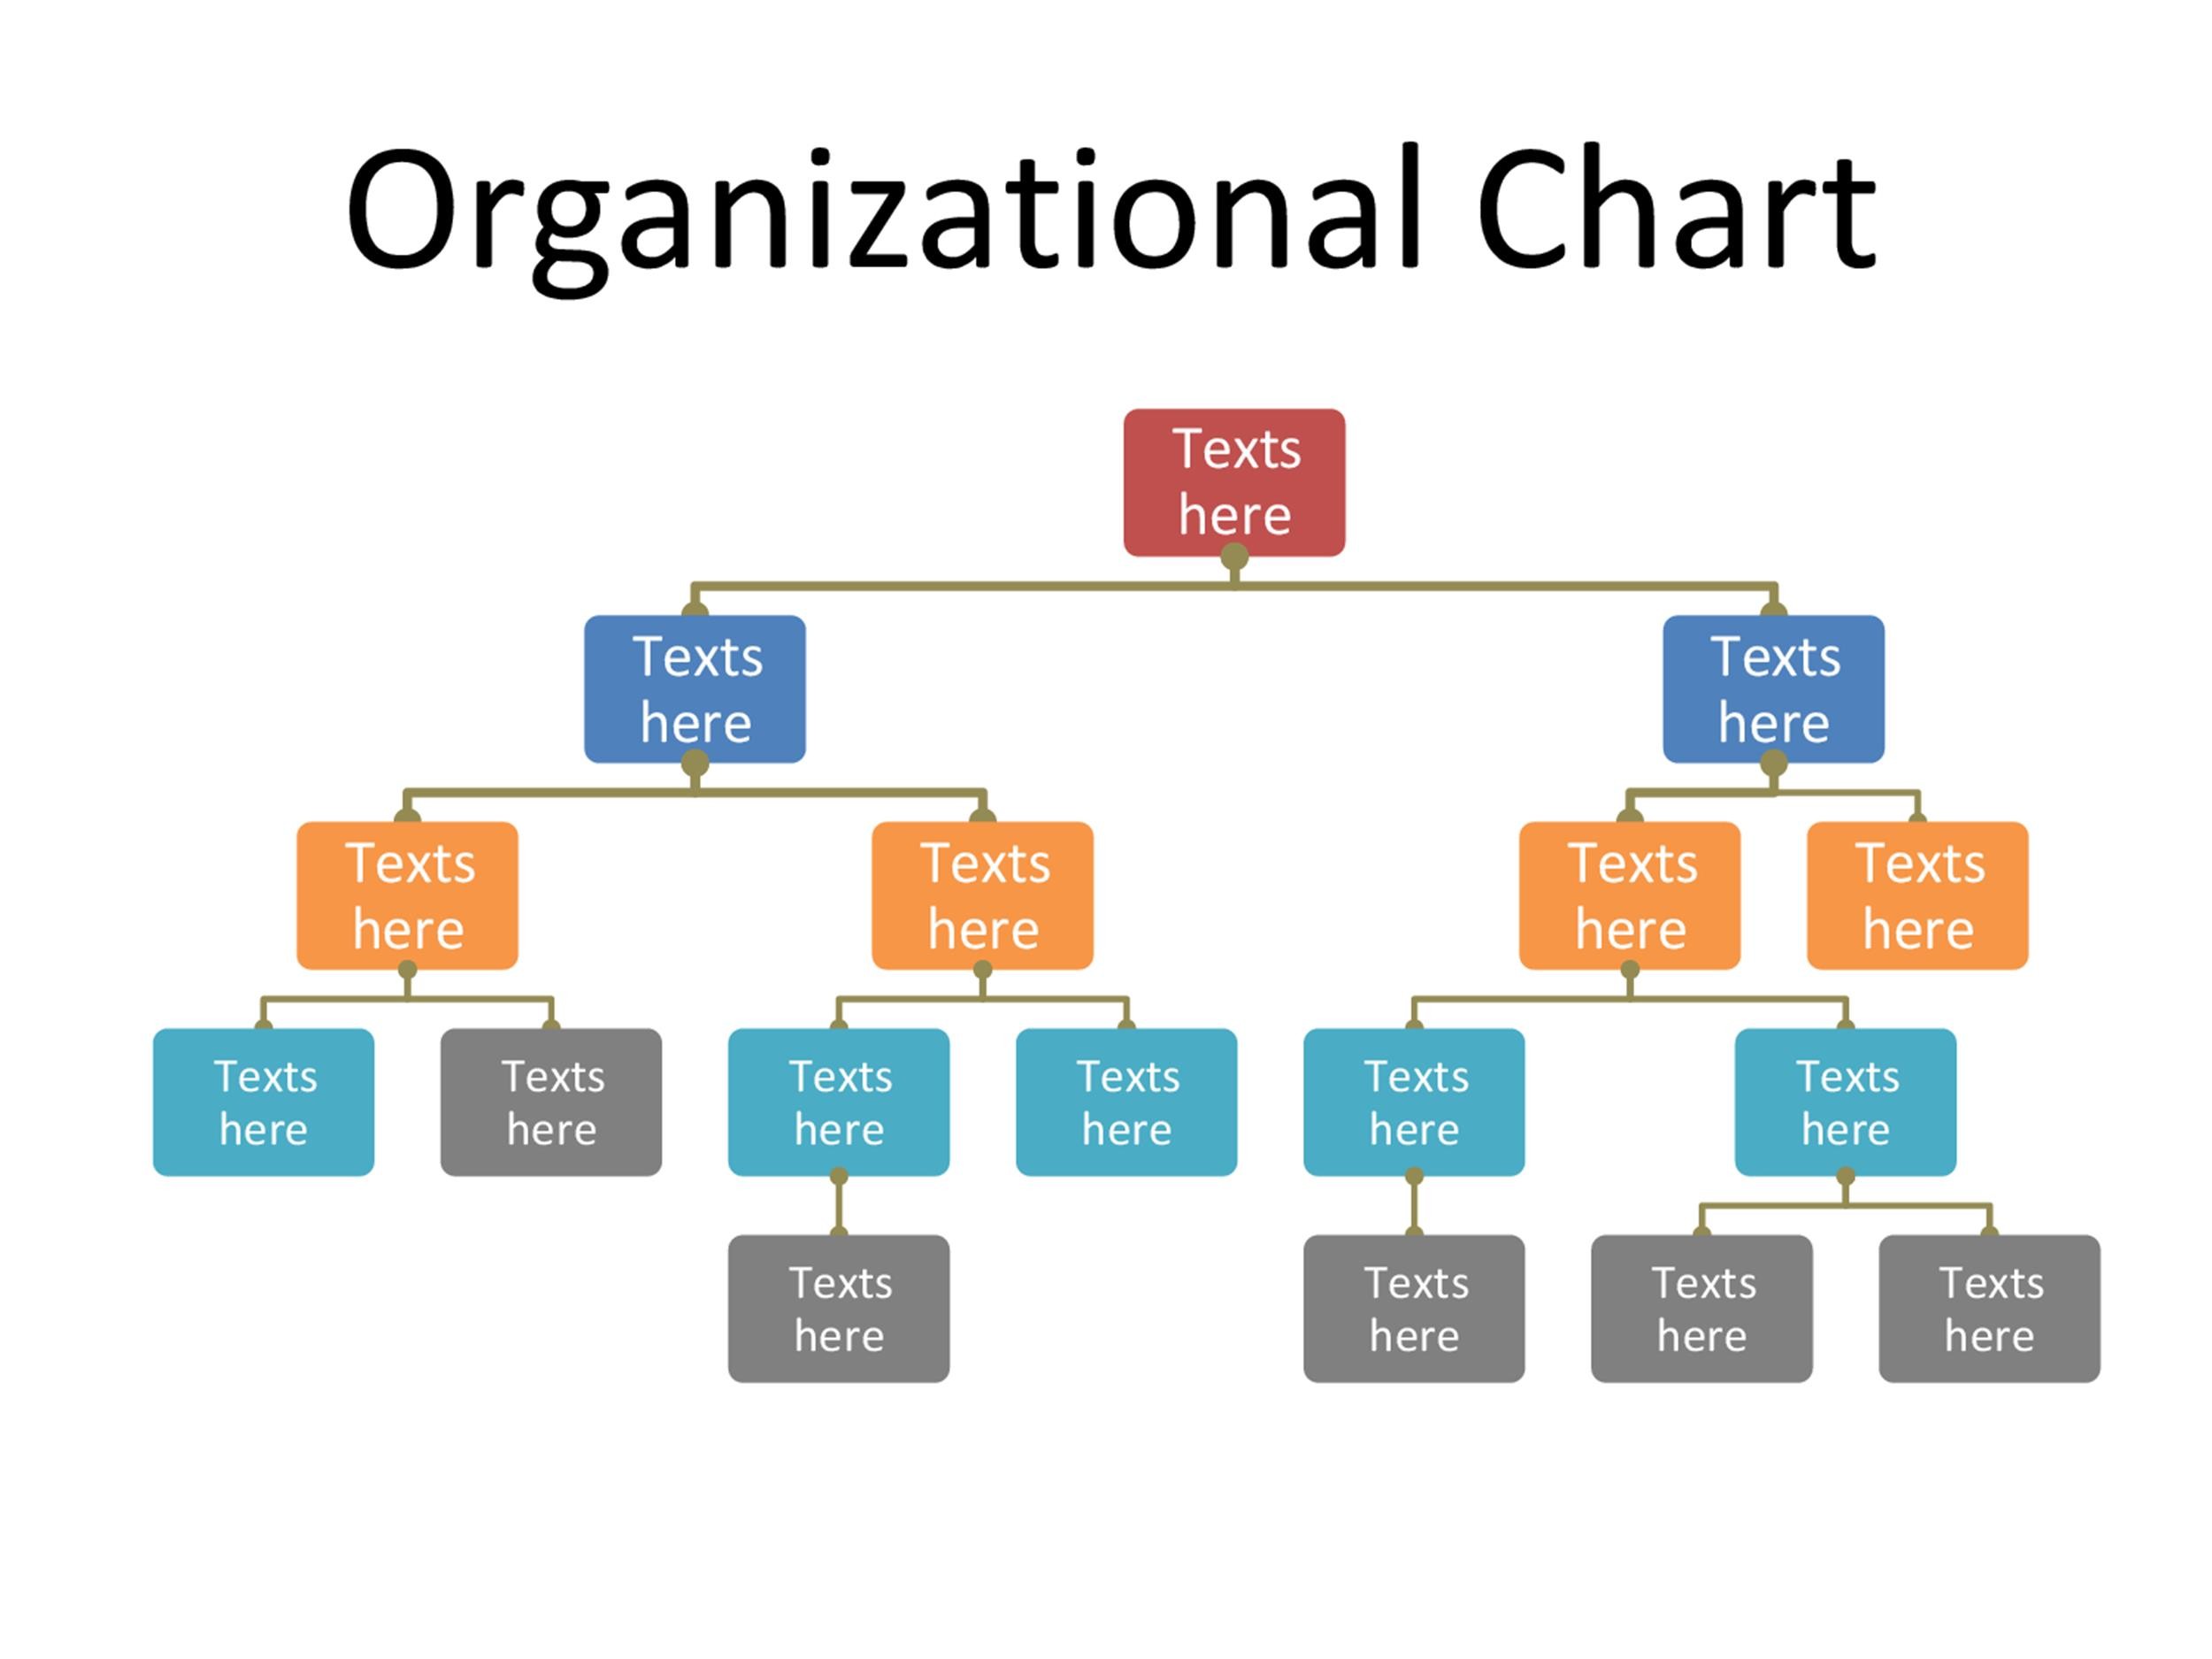 Organizational Flow Chart Template Excel